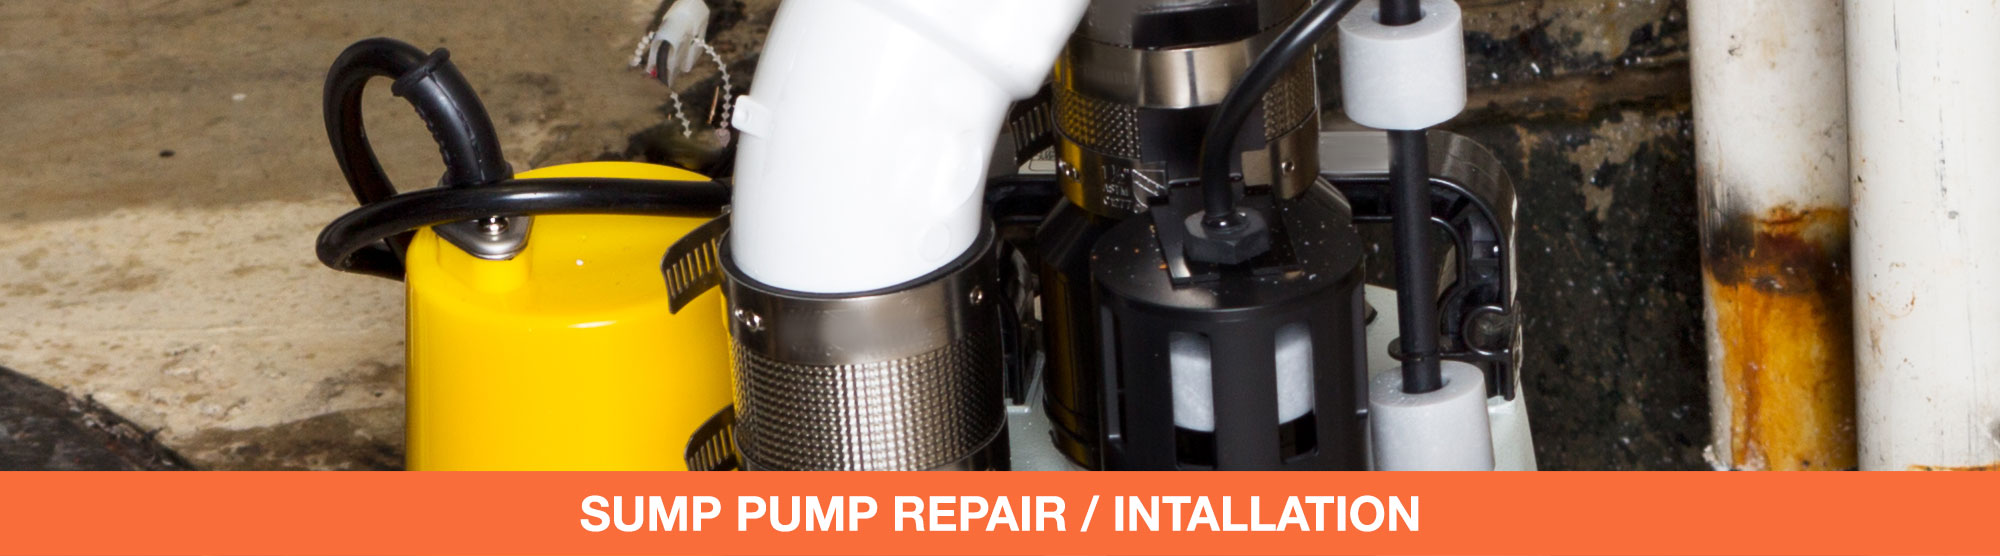 Sump Pump Repair and Installation